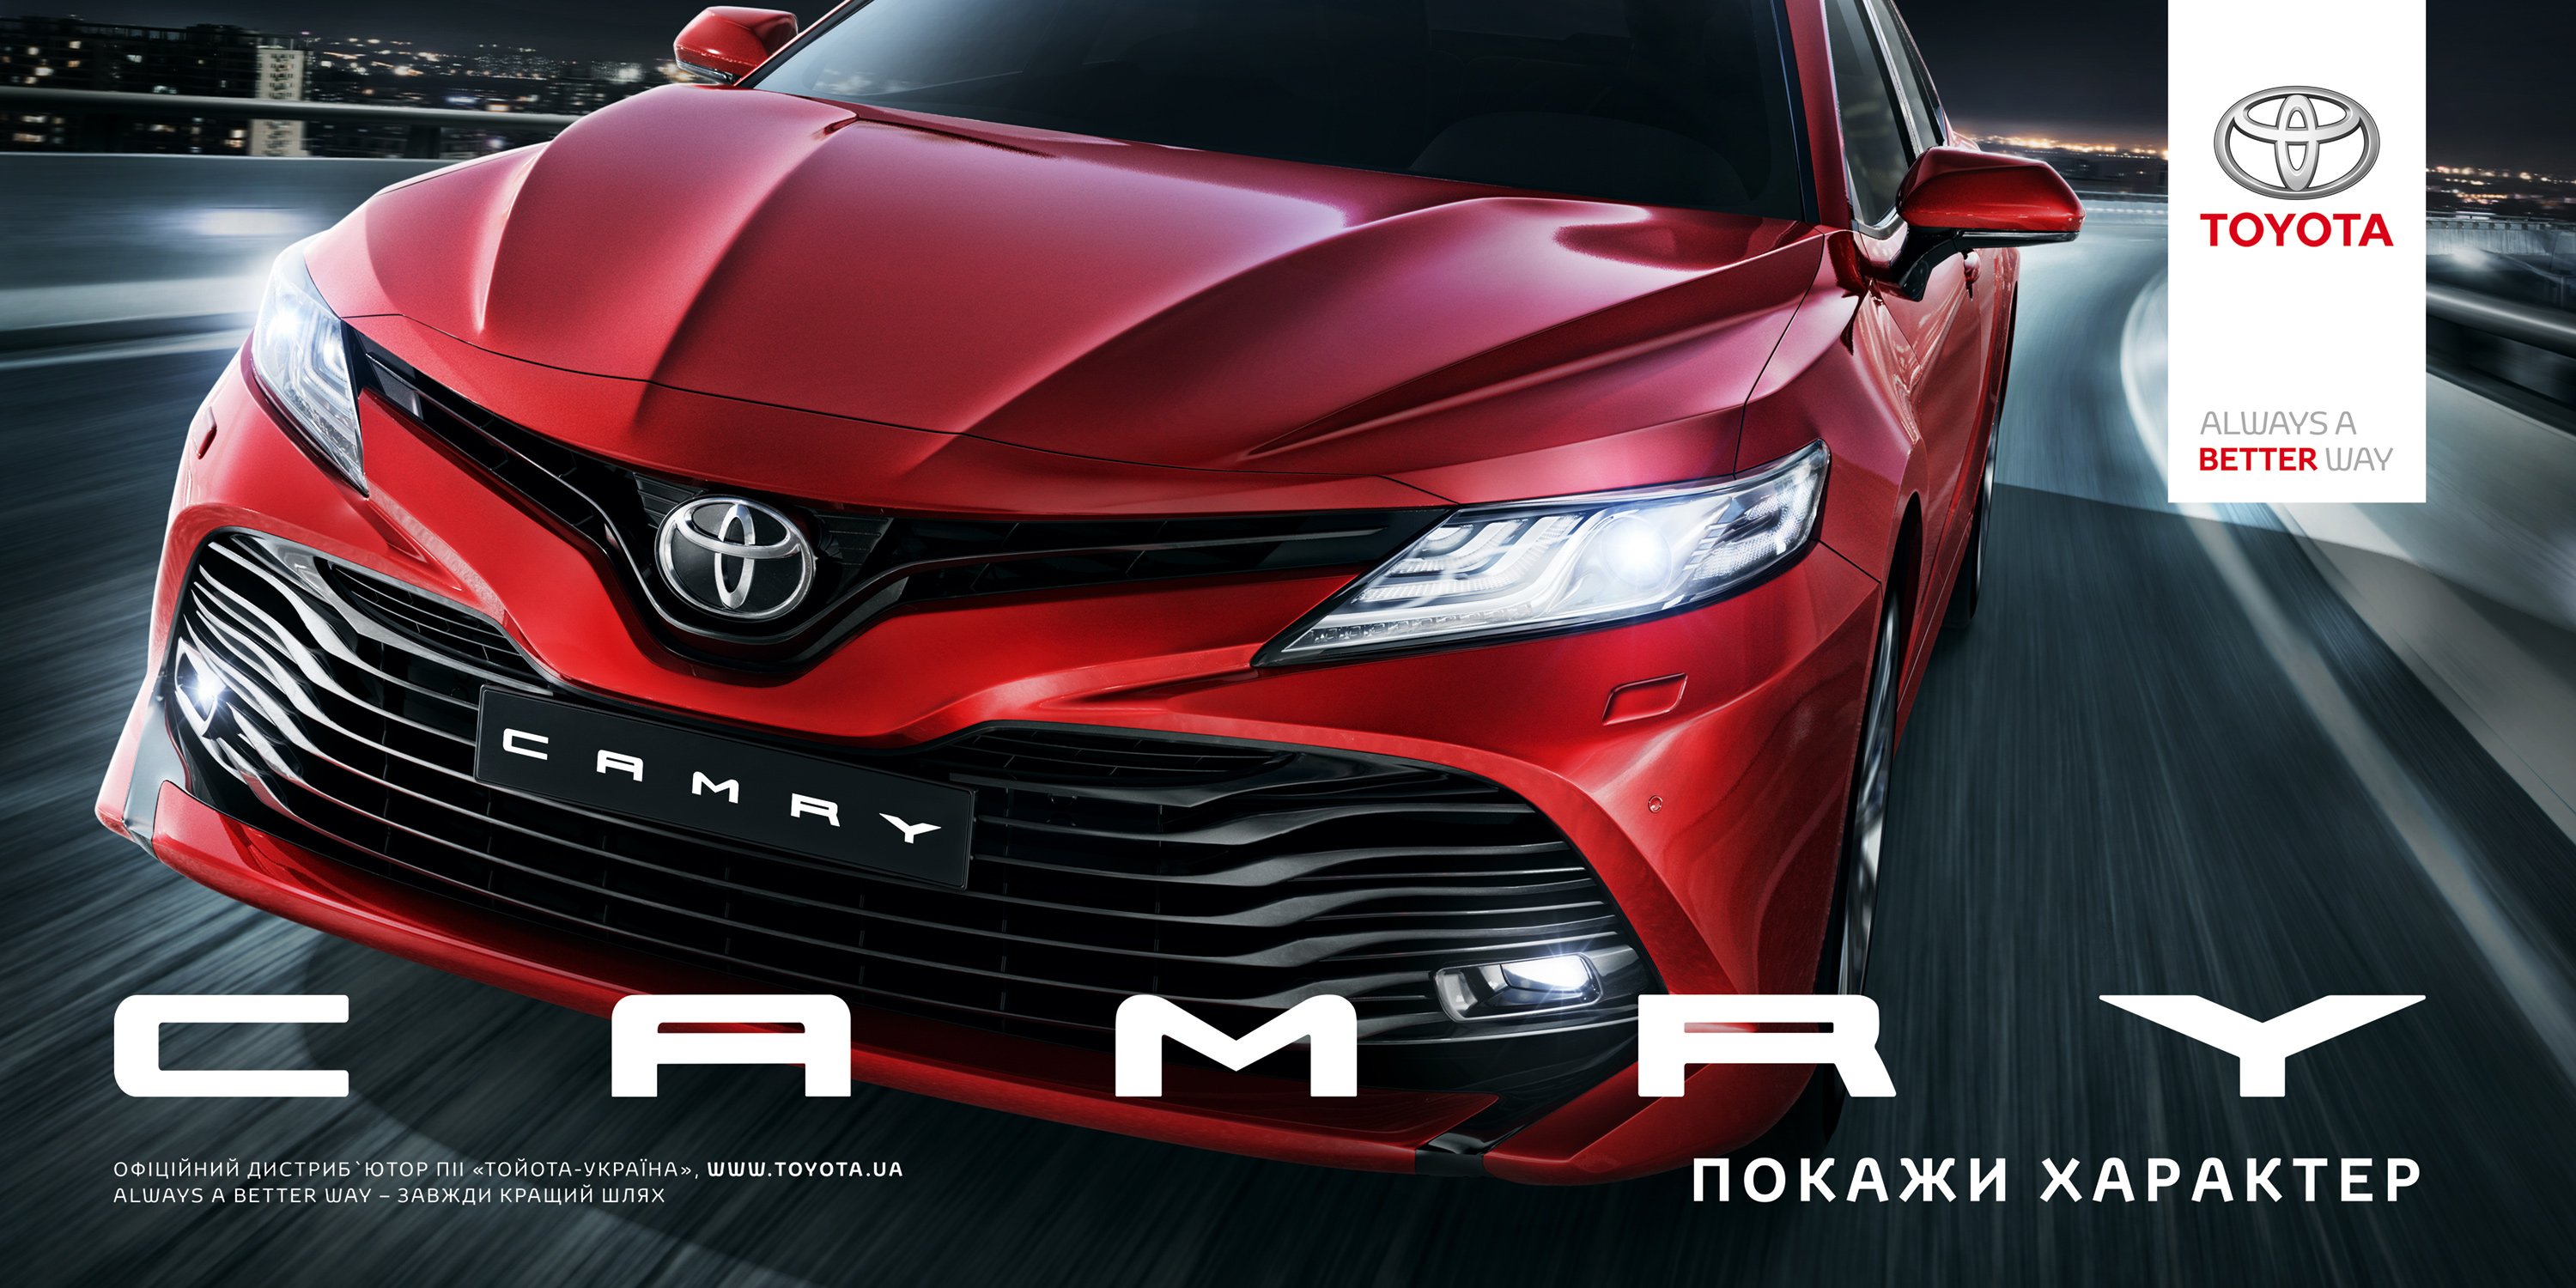 Слоган тойоты. Реклама Тойота. Toyota Camry реклама. Реклама автомобиля Тойота. Реклама про автомобили Toyota.